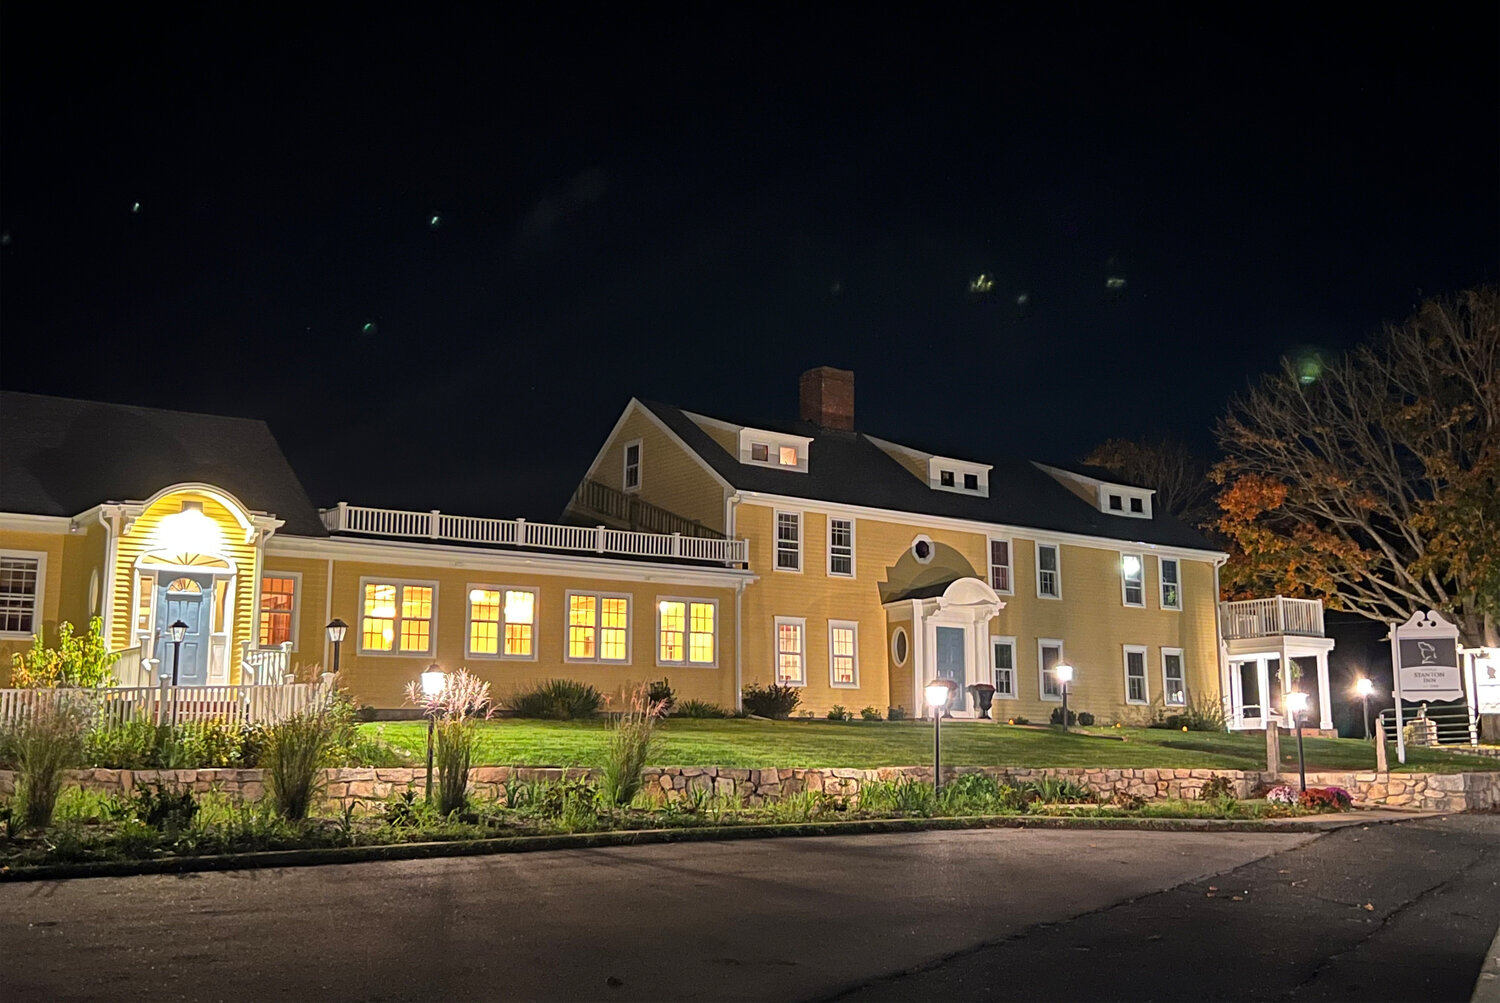 The General Stanton Inn at night